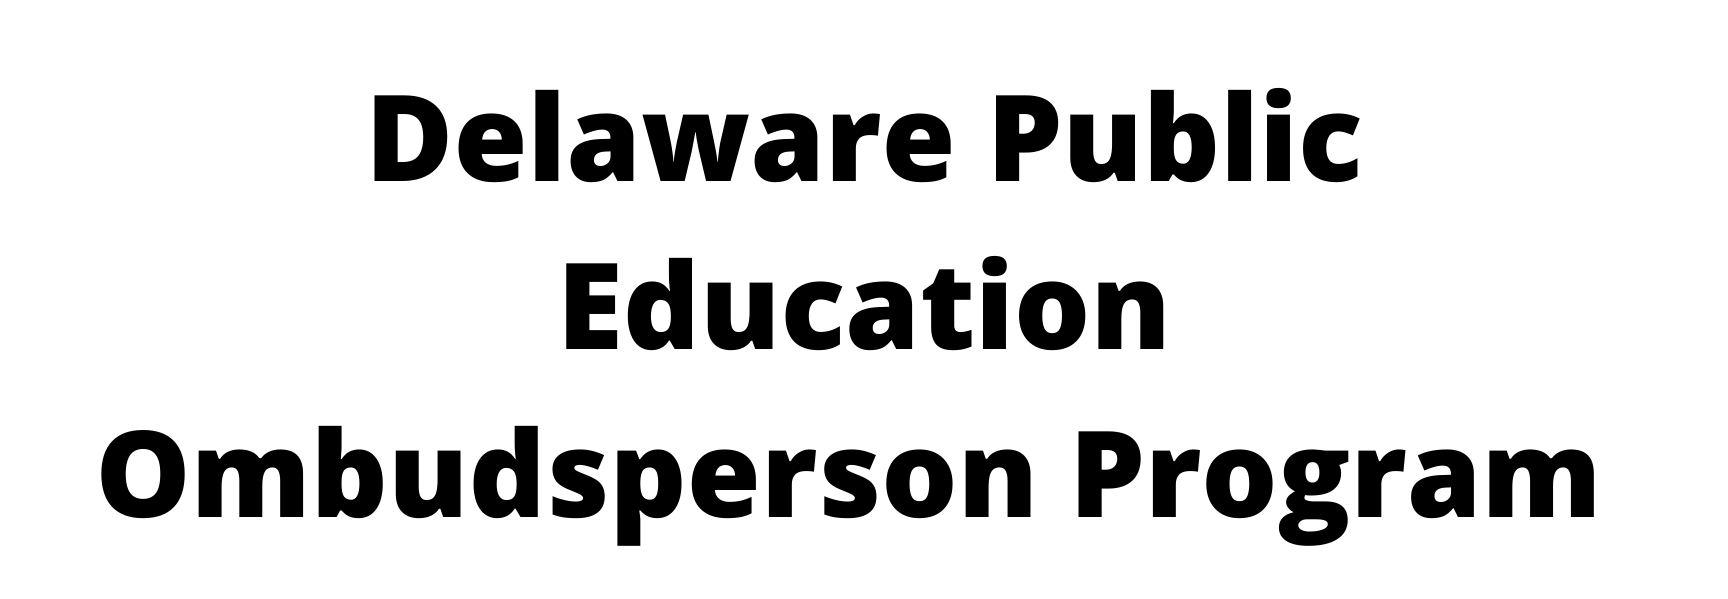 Public Education Ombudsperson Program (DPEOP)